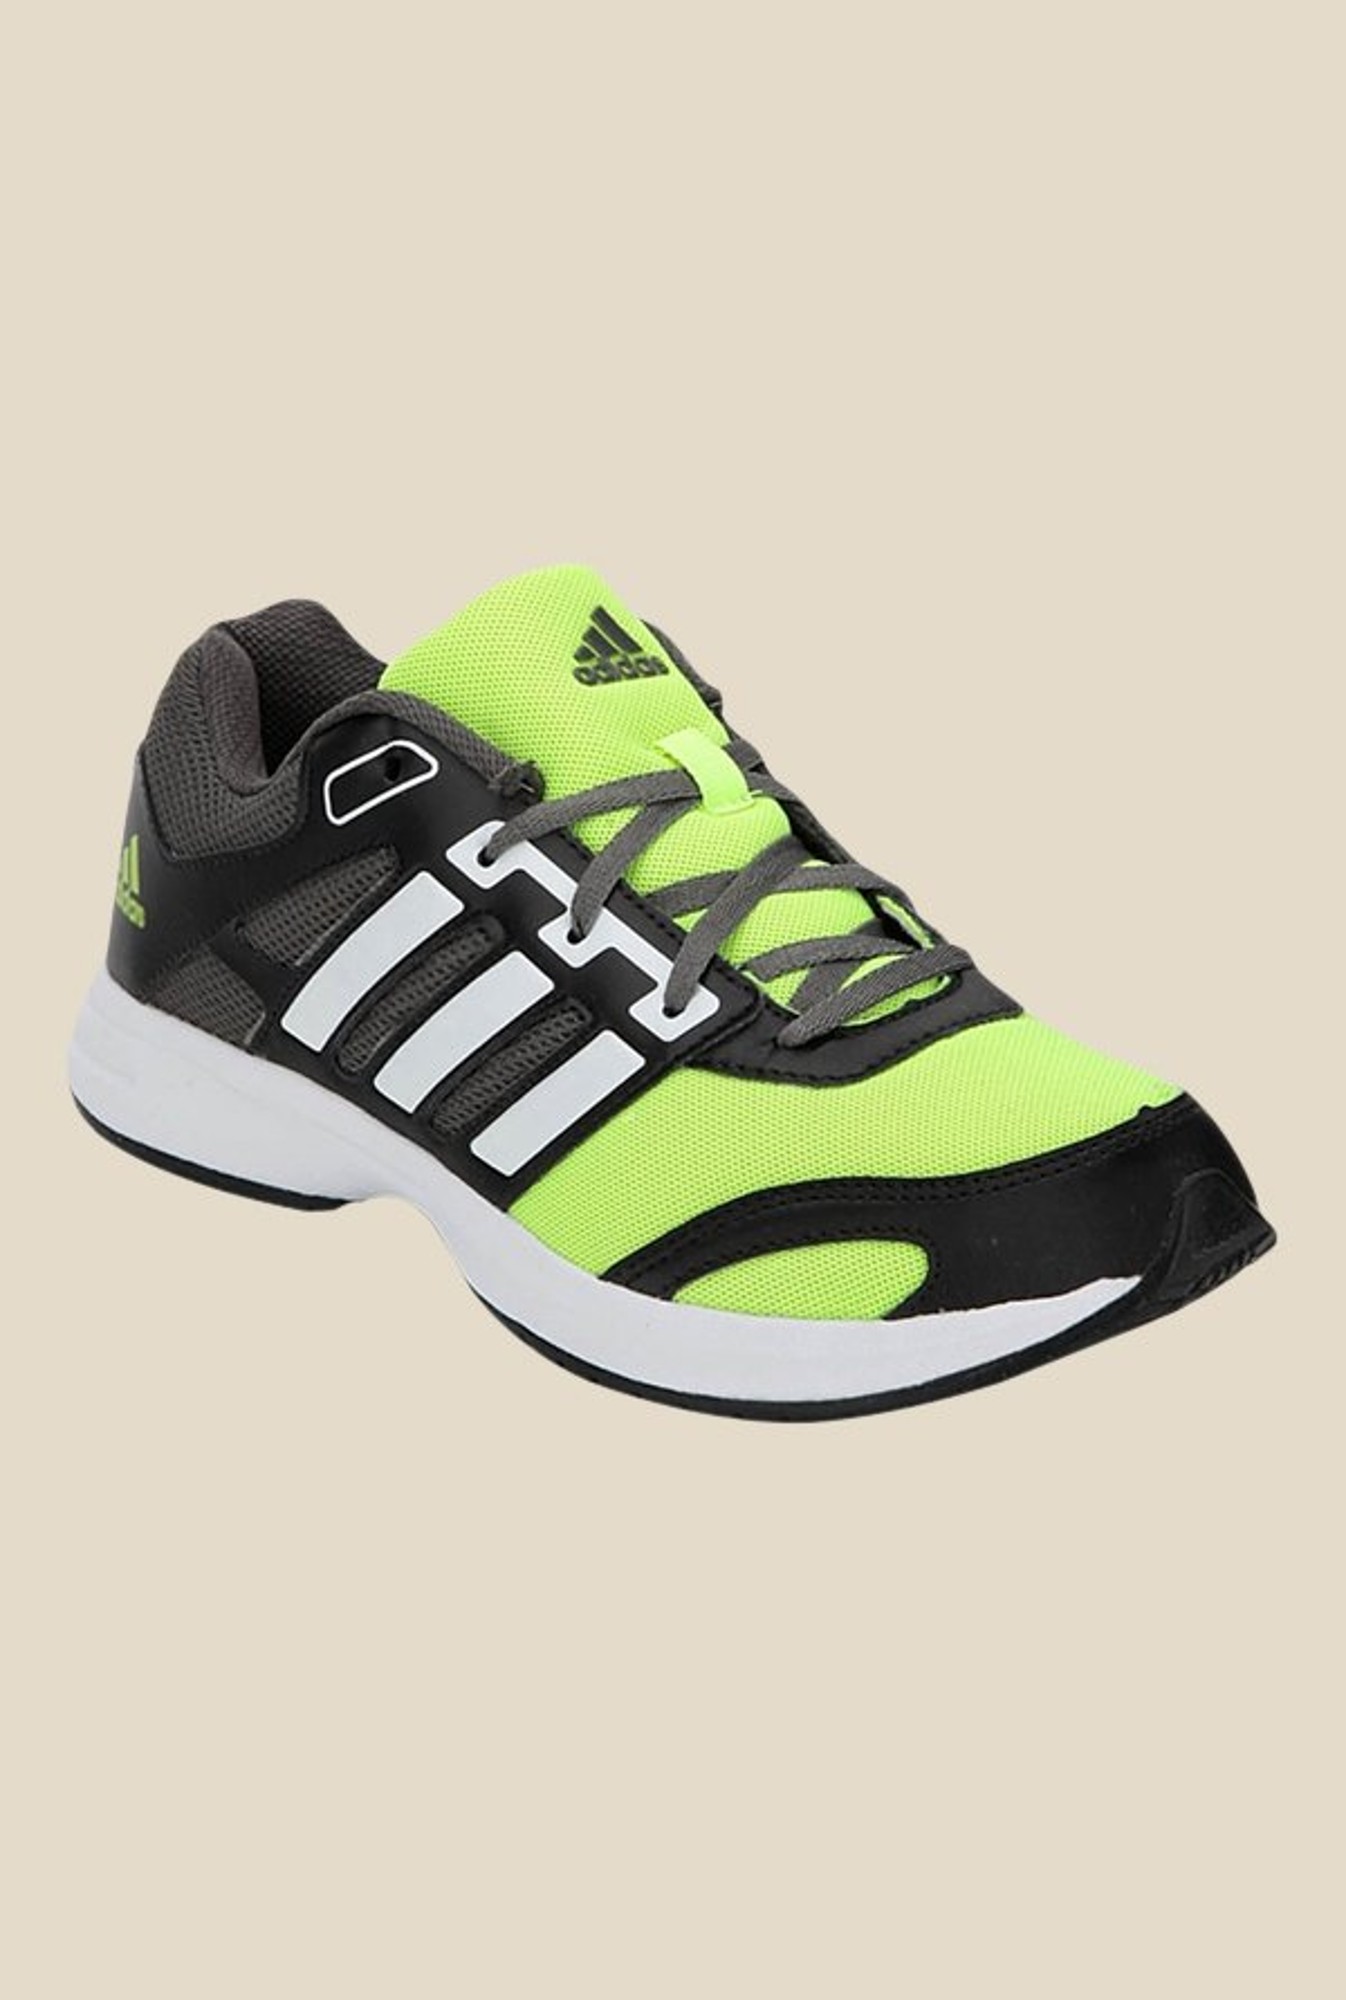 adidas kray 3.0 m running shoes